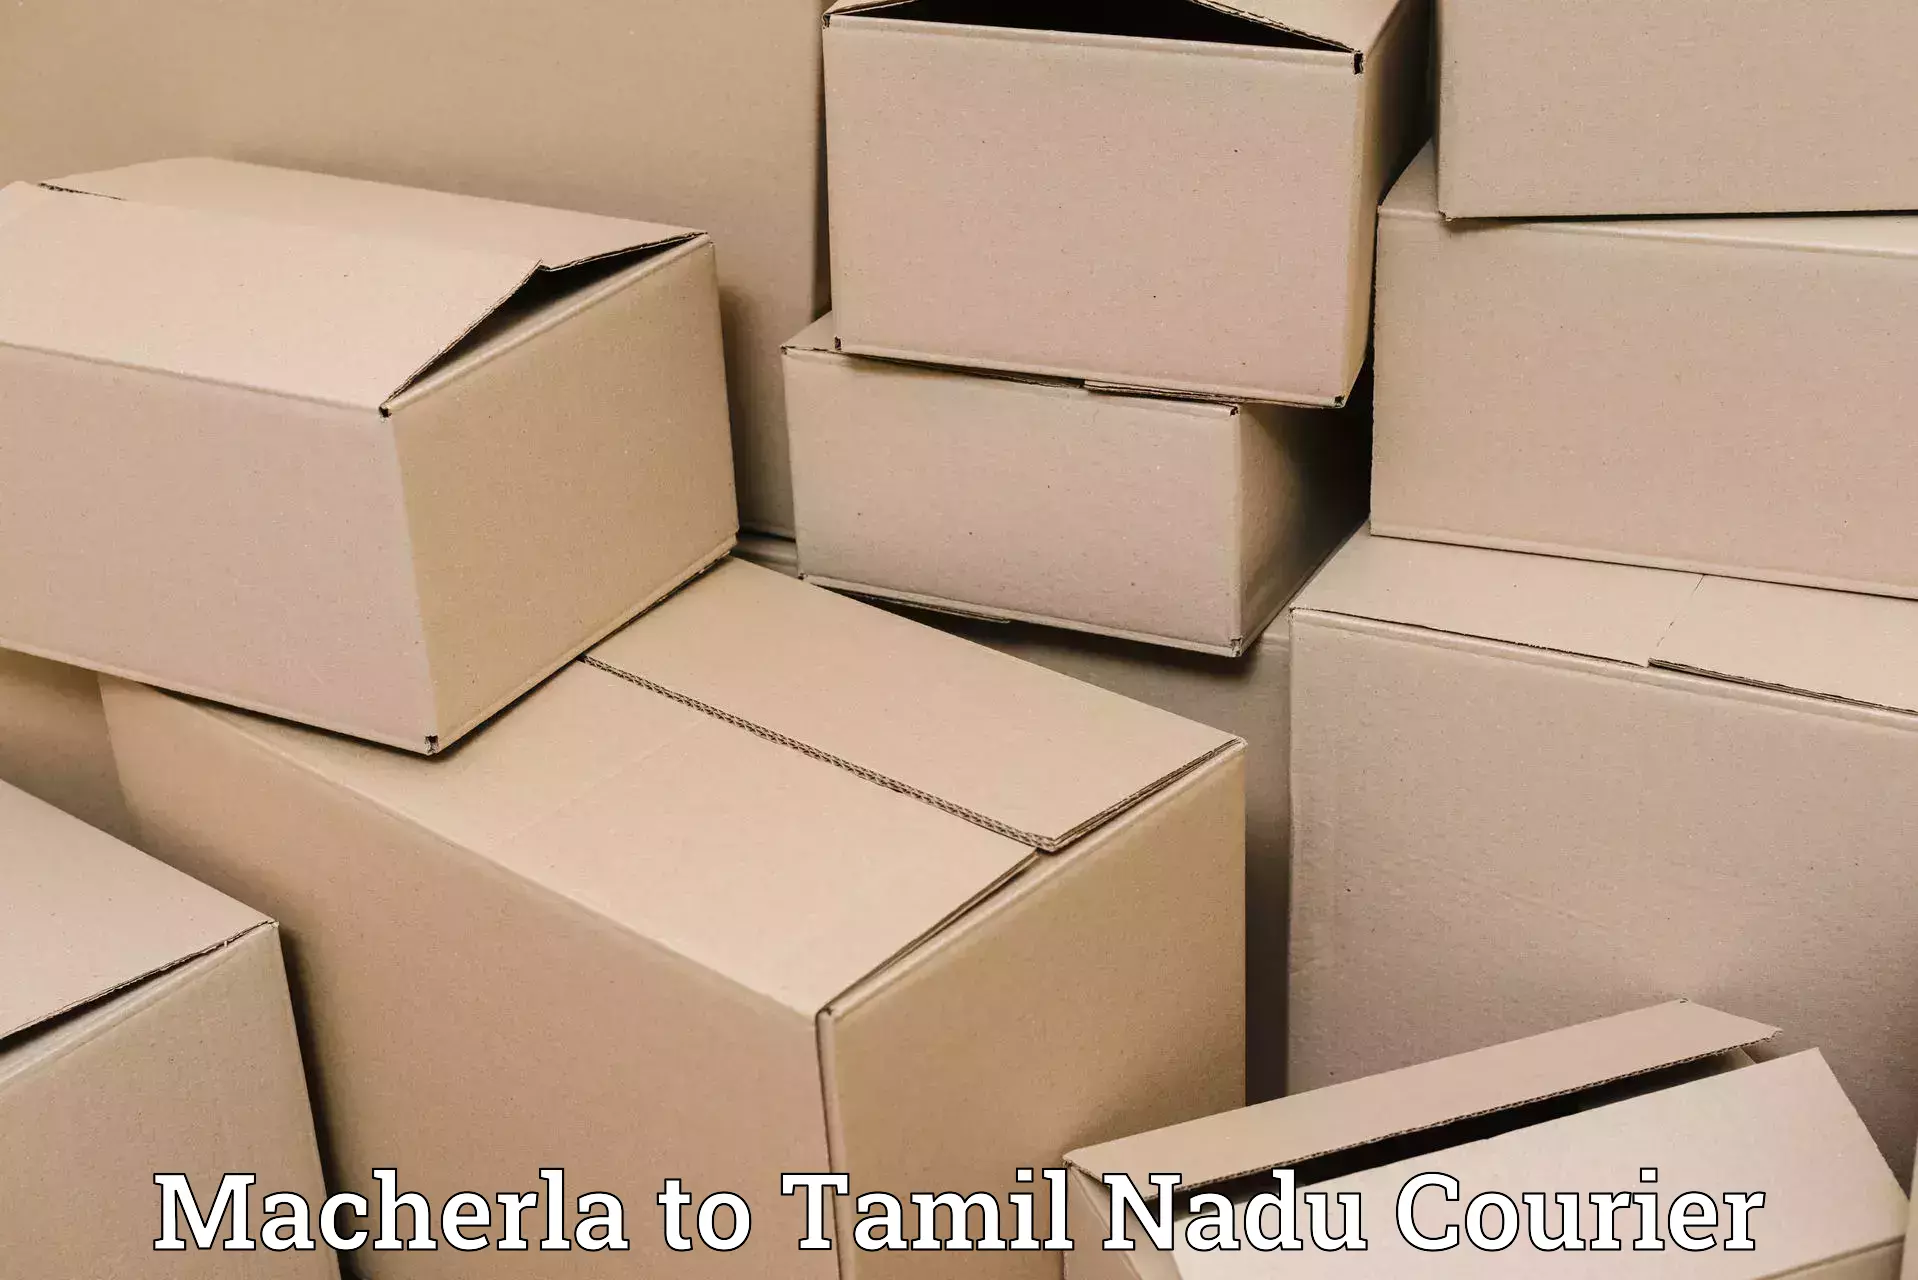 Affordable international shipping Macherla to Tamil Nadu